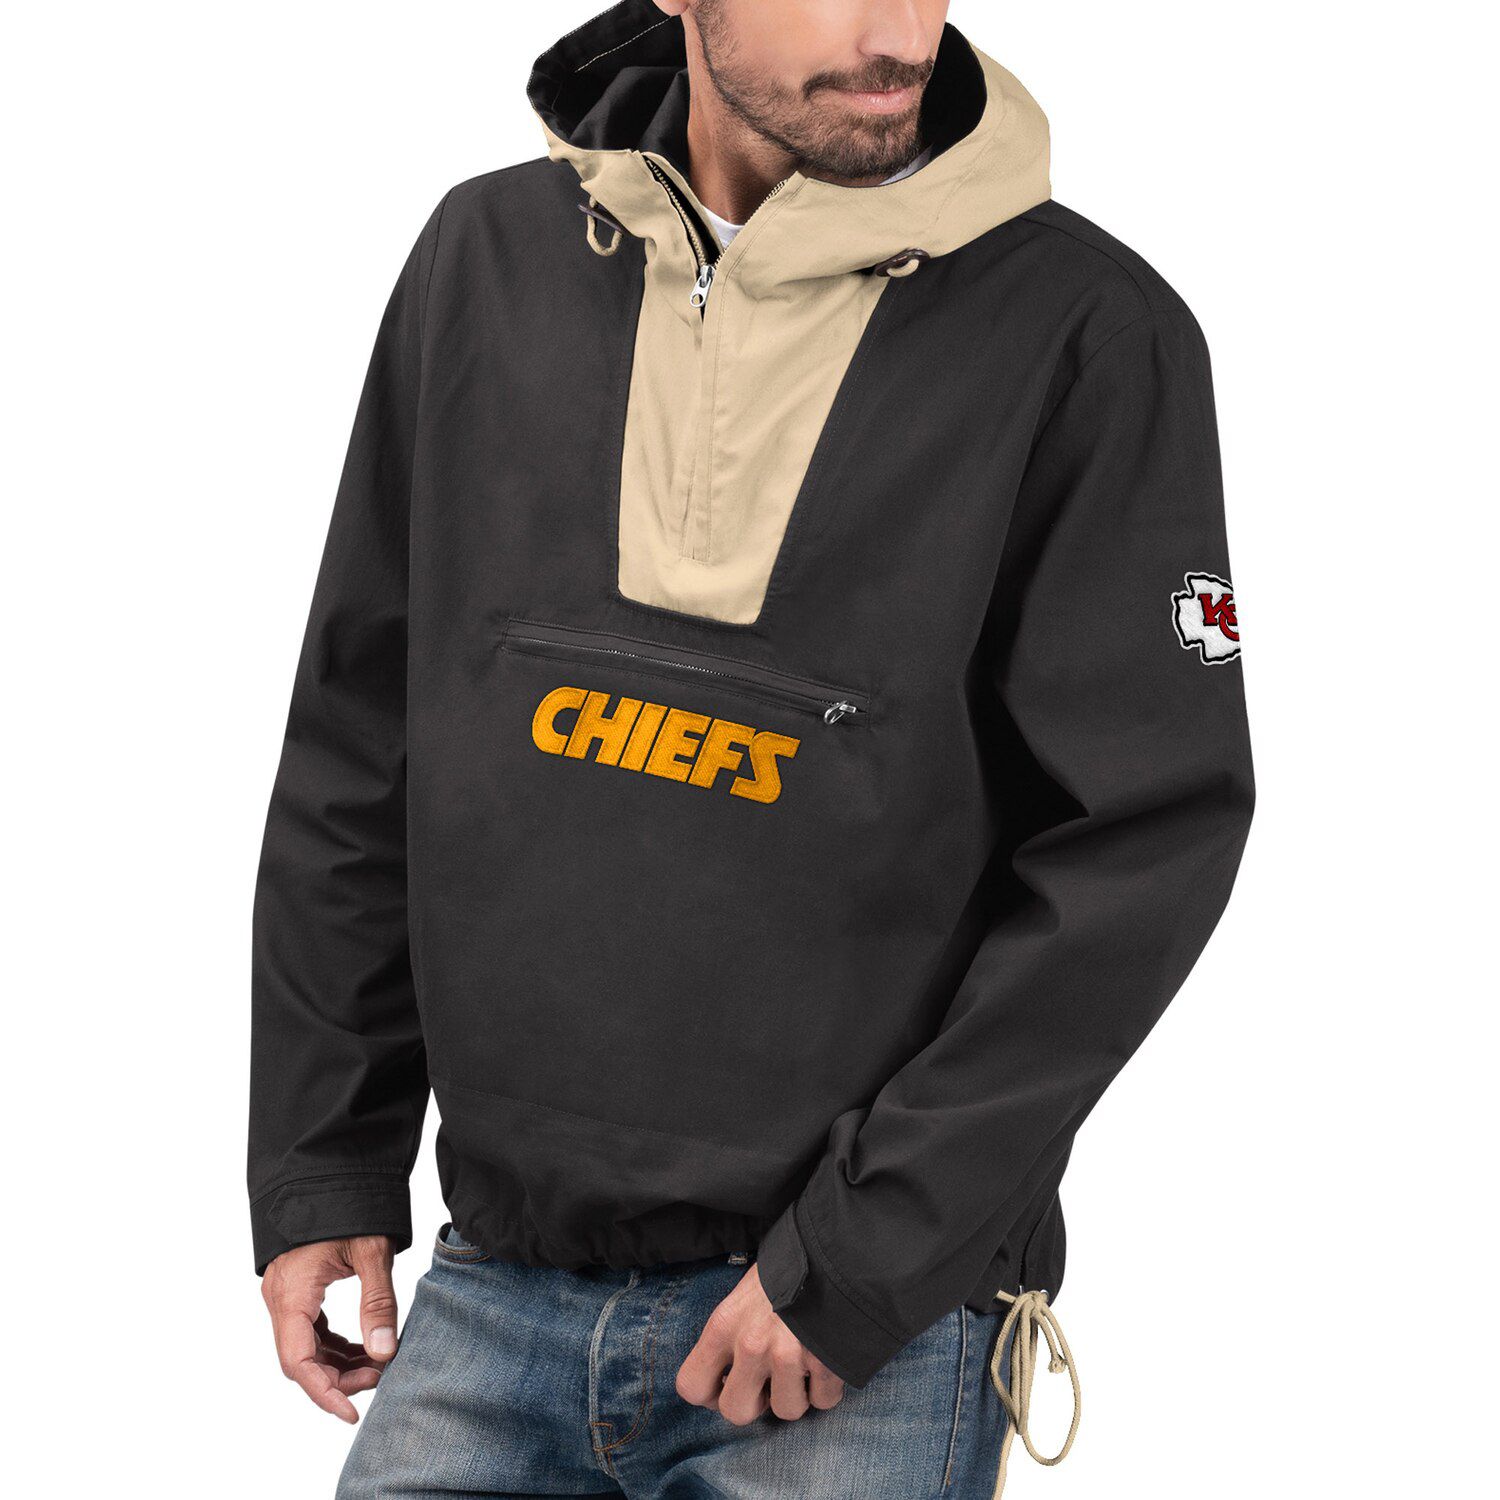 chiefs anorak jacket